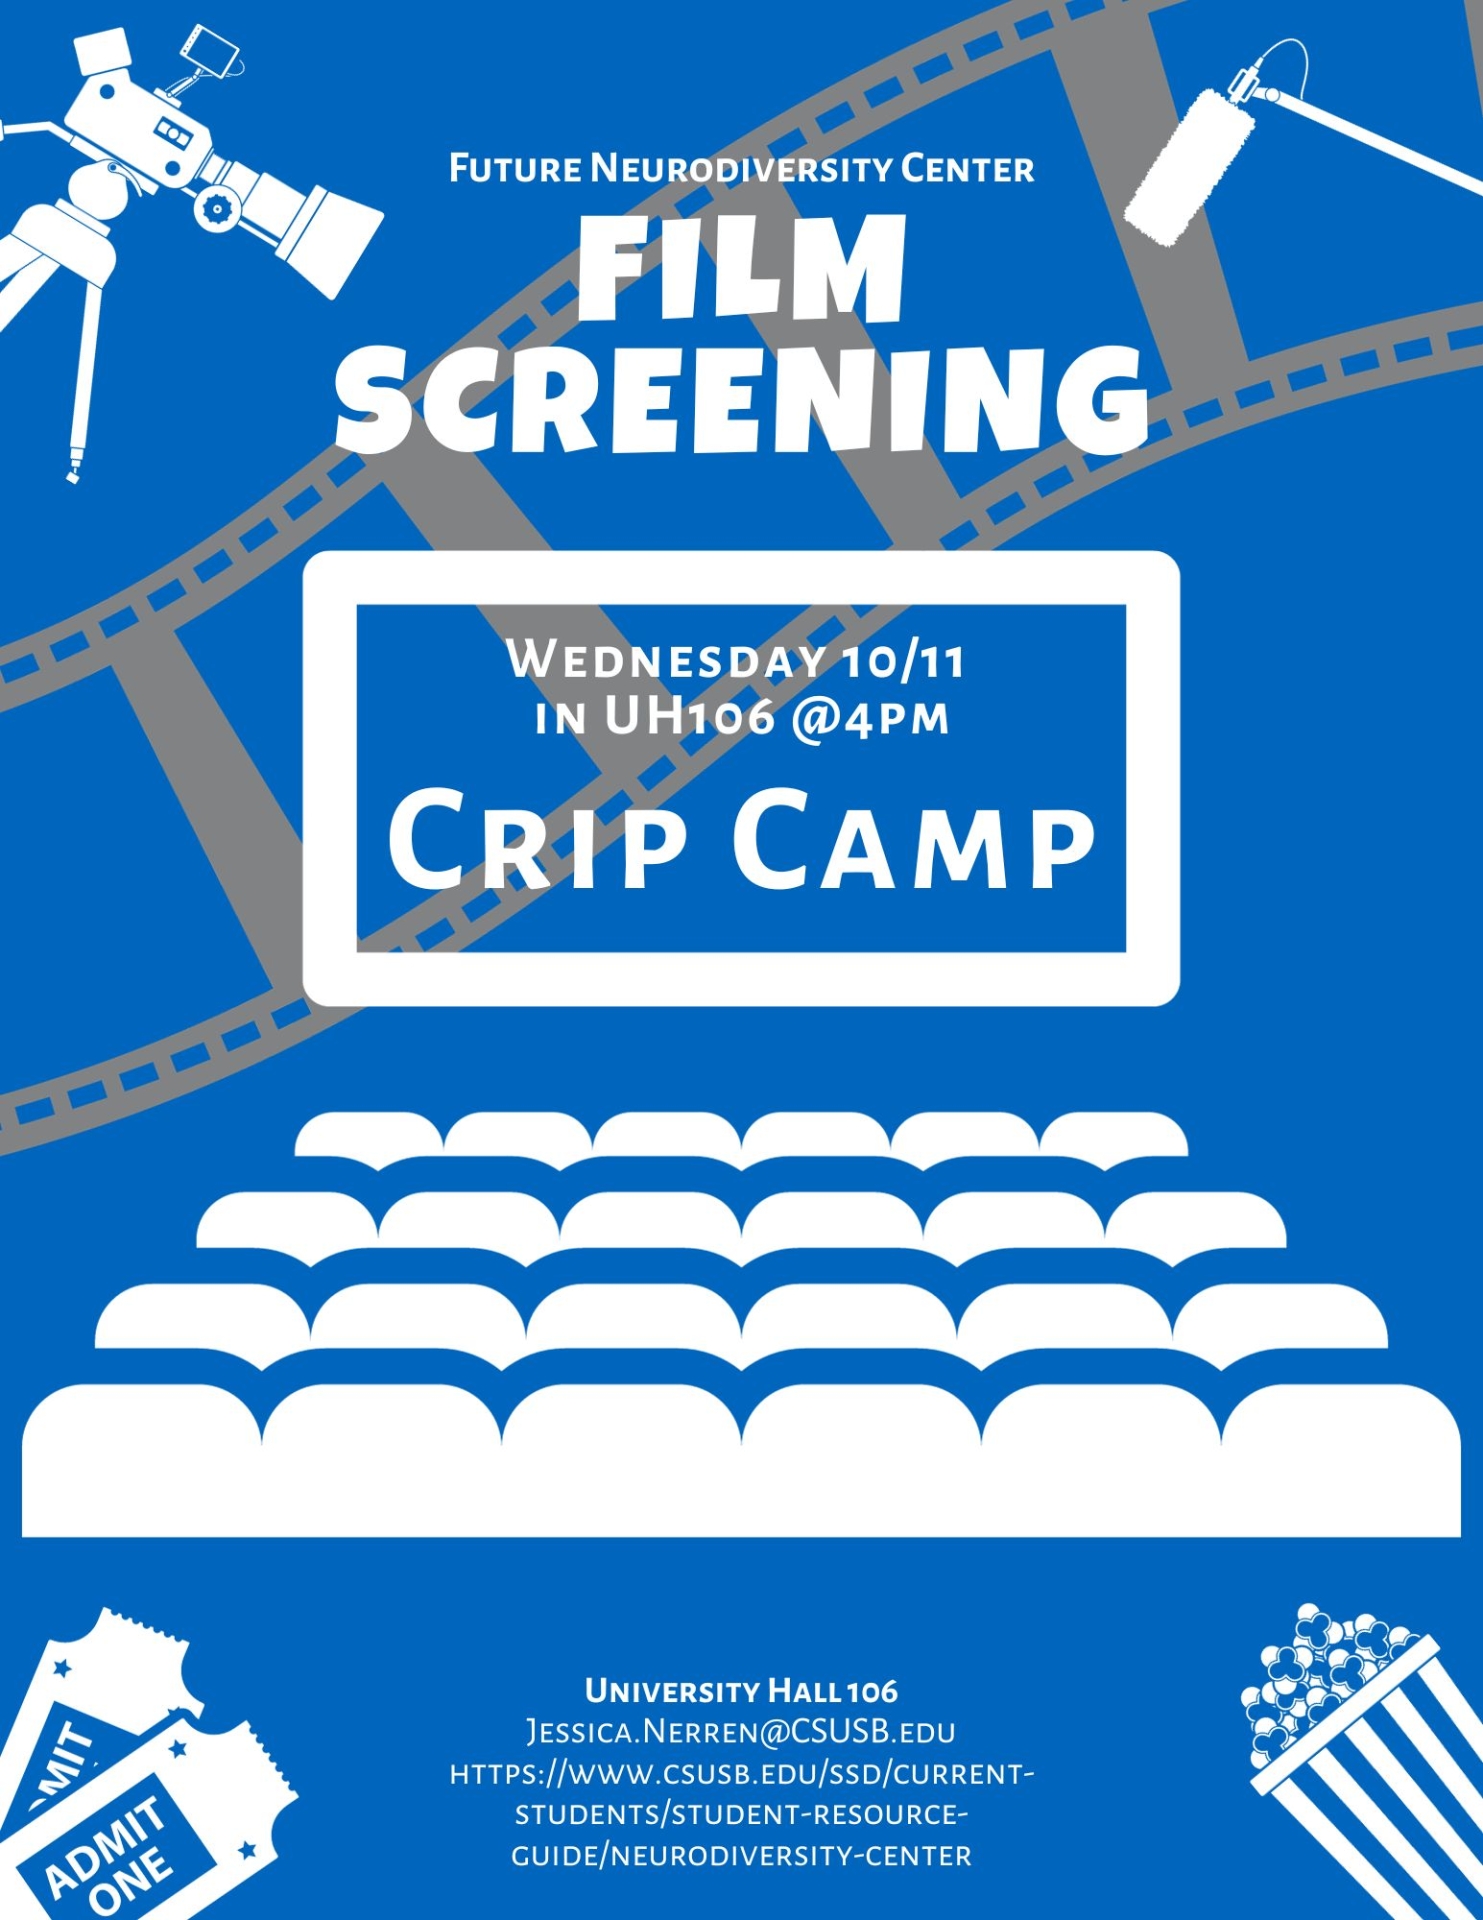 Future Neurodiversity Center. Film screening. Wednesday  10/11 at 4PM. Crip Camp. University Hall 106 Jessica.Nerren@CSUSB.edu https://www.csusb.edu/ssd/current-students/student-resource-guide/neurodiversity-center